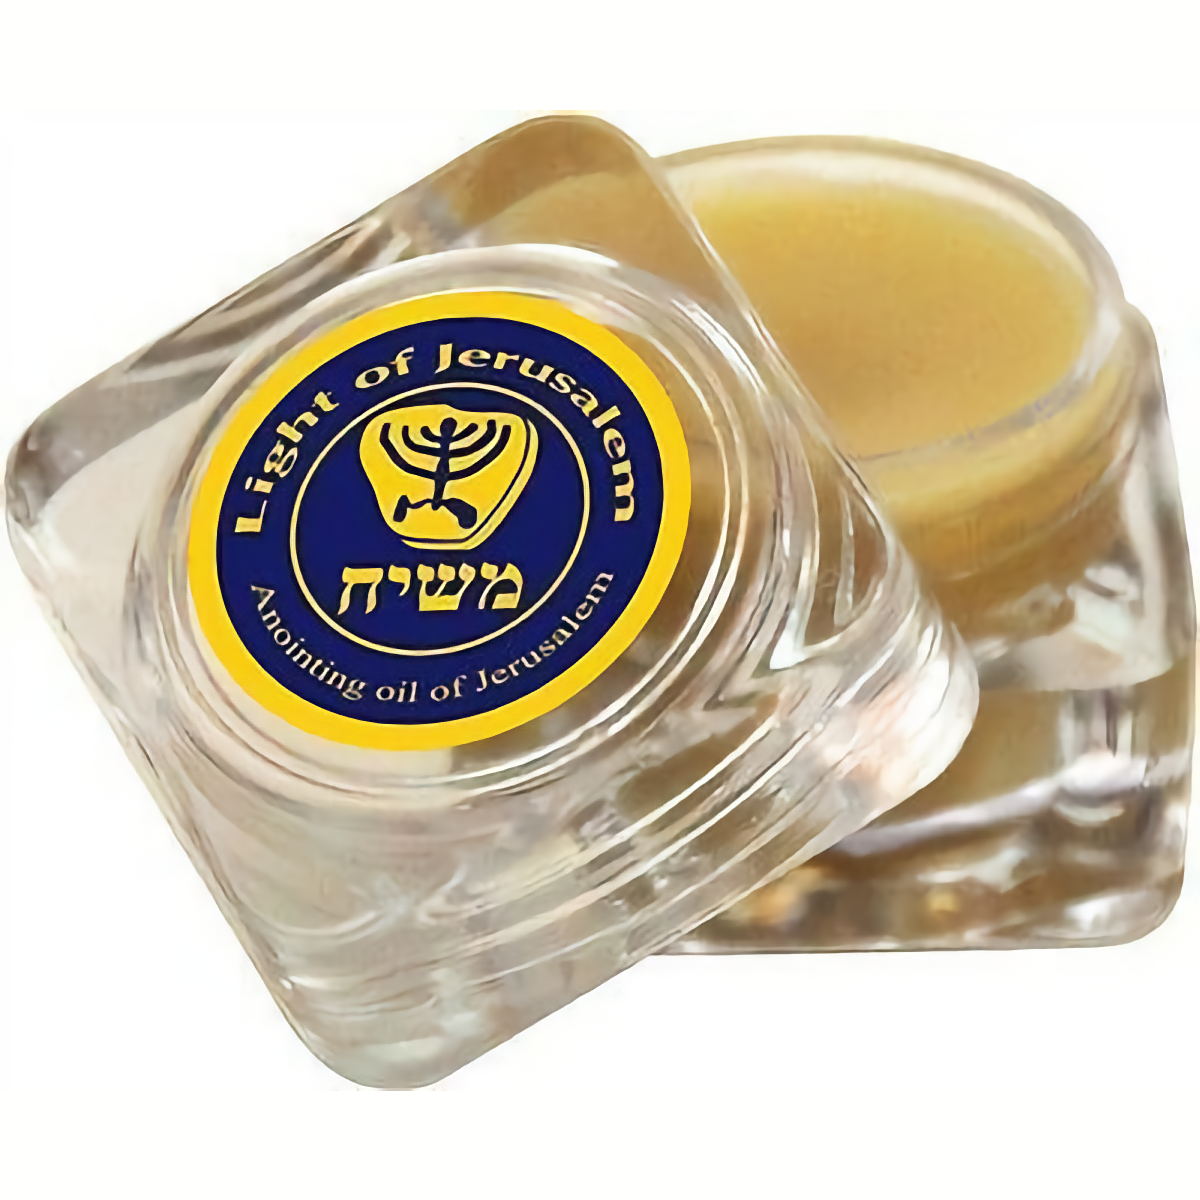 Light of Jerusalem Anointing Balm cream 5 ml - 0.17 fl.oz. Made in Israel